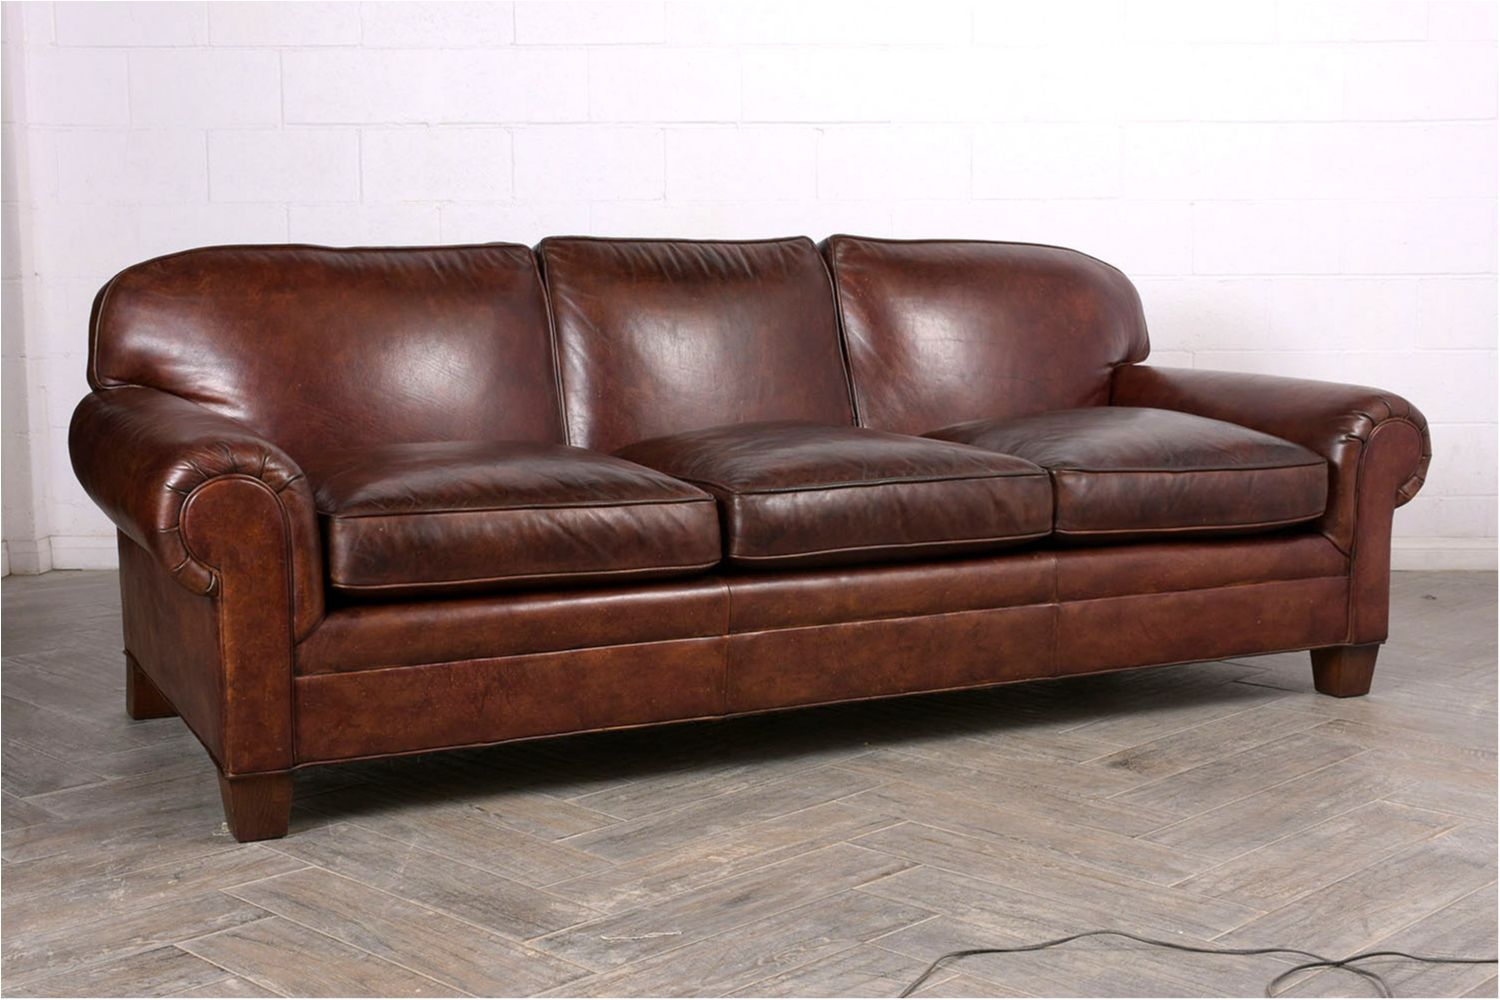 Restored Ralph Lauren Leather Sofa